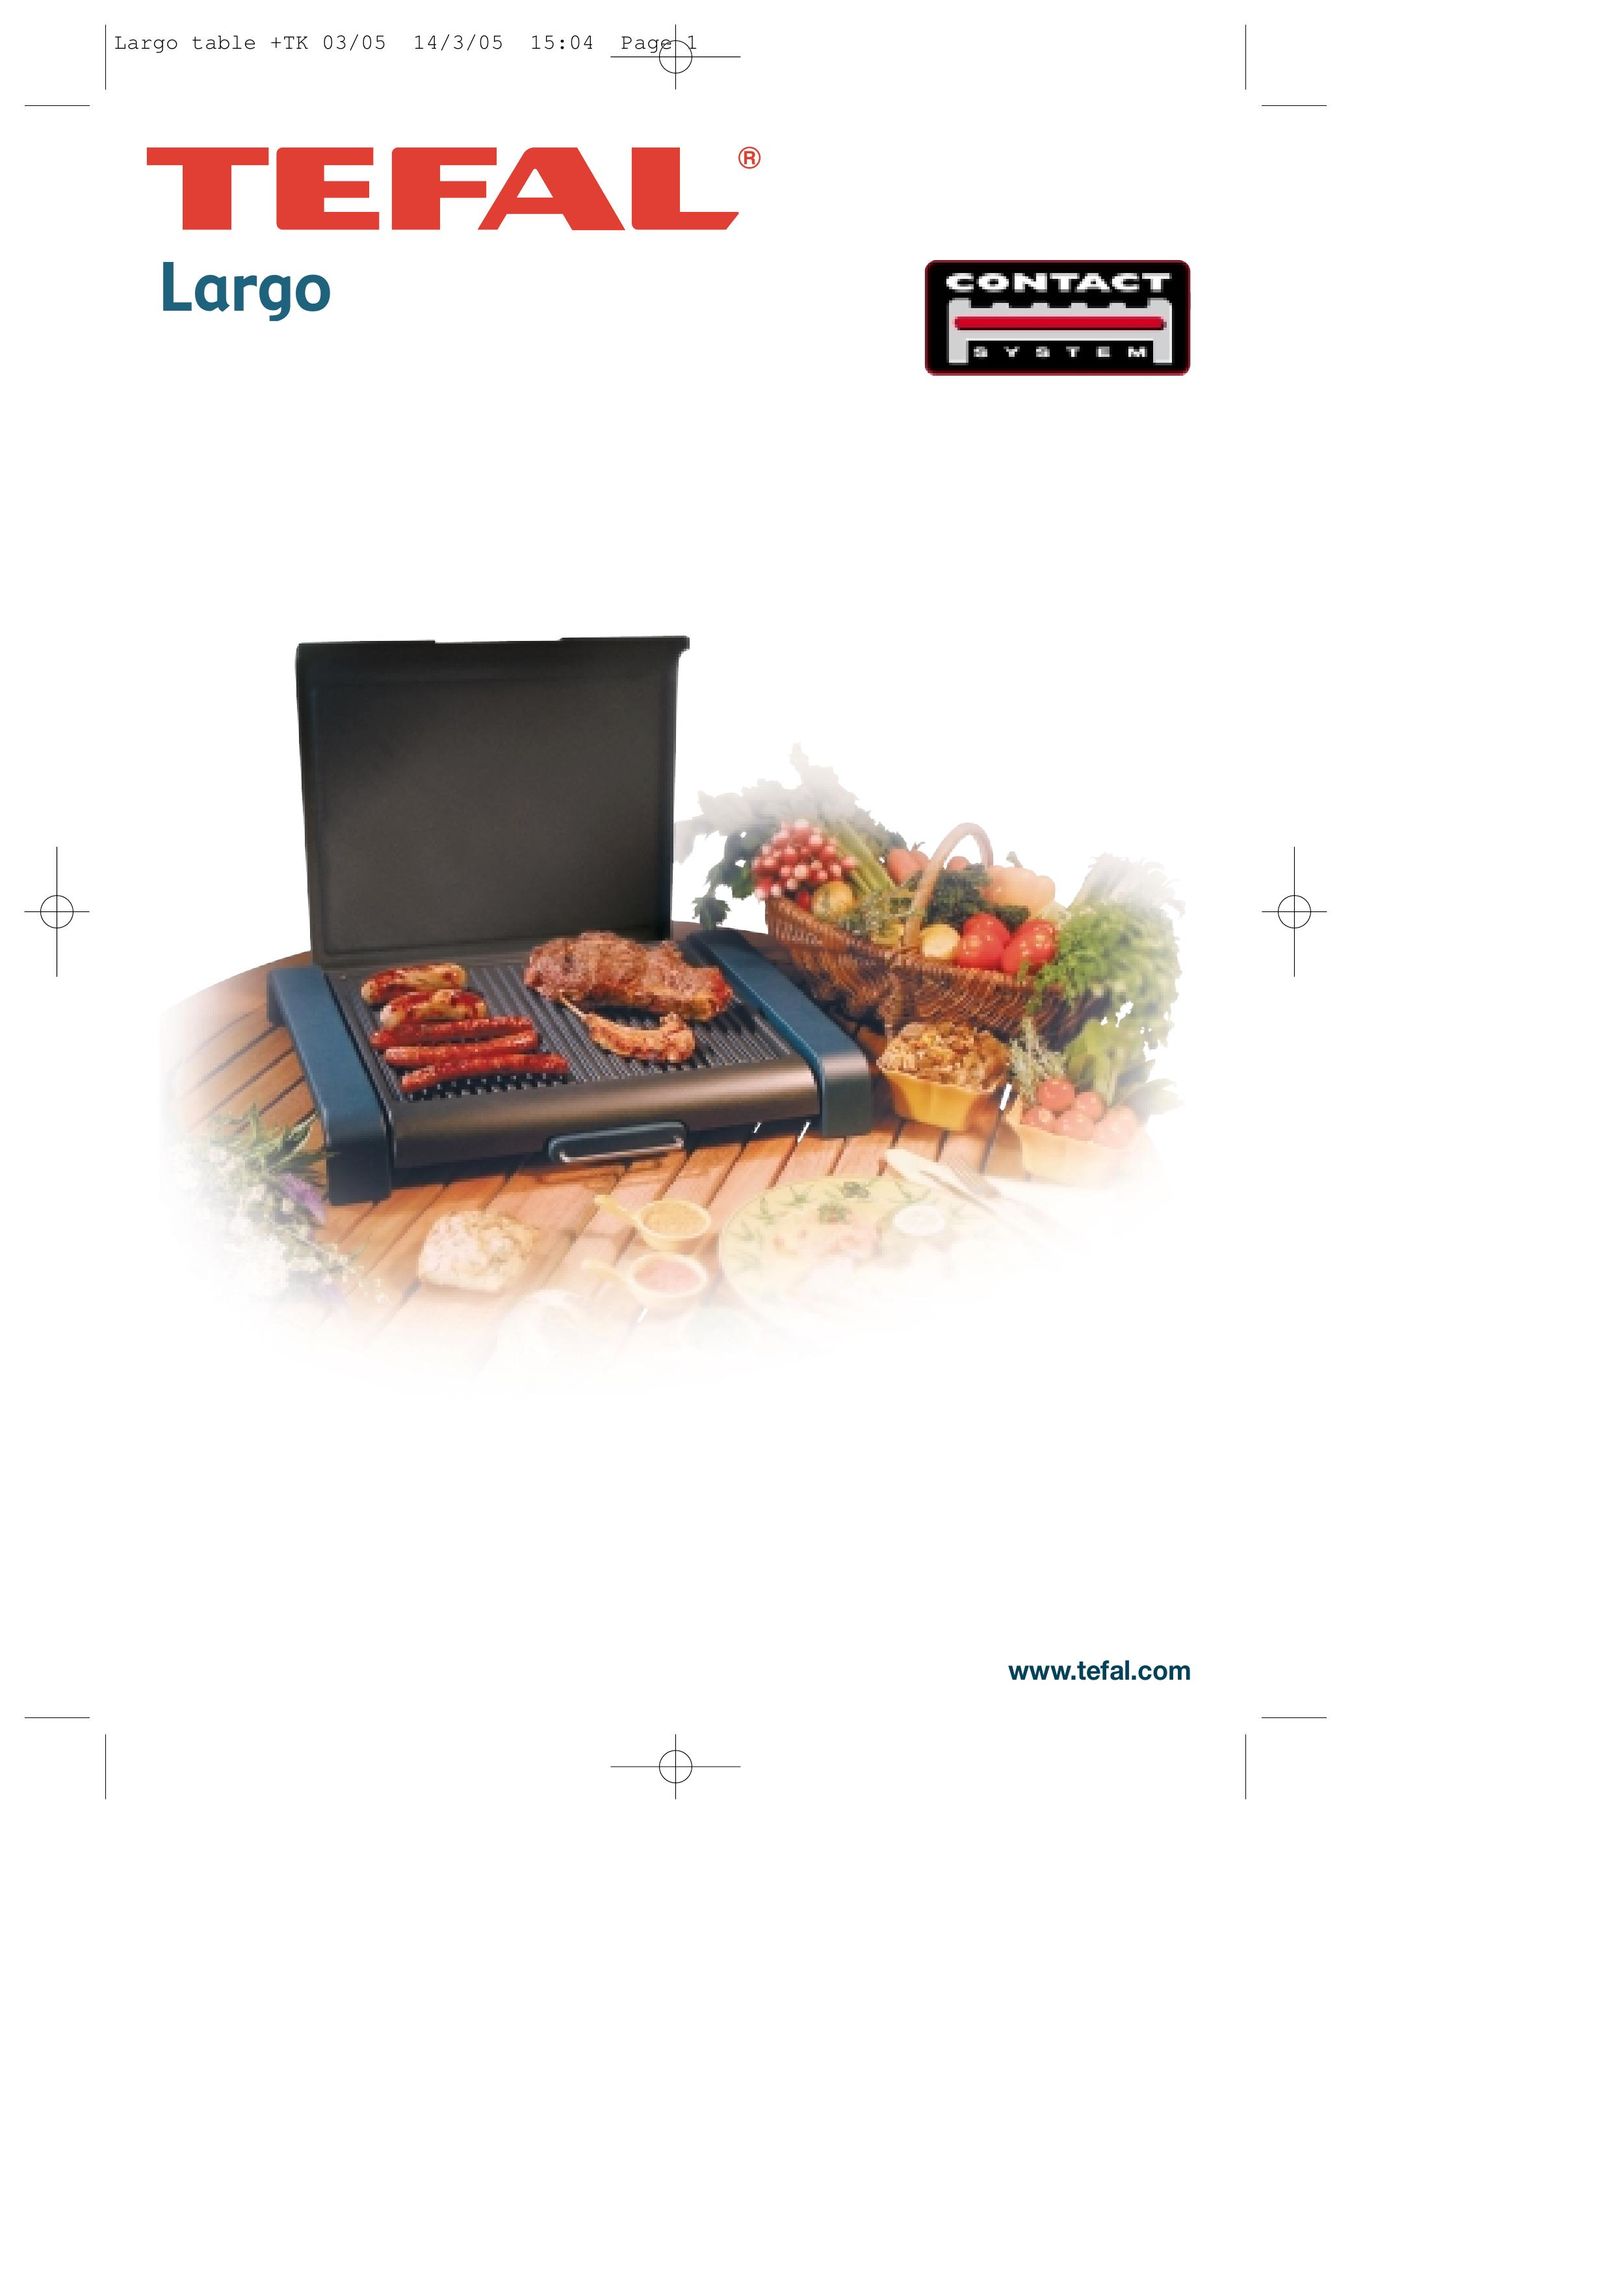 Groupe SEB USA - T-FAL CB6010 Kitchen Grill User Manual